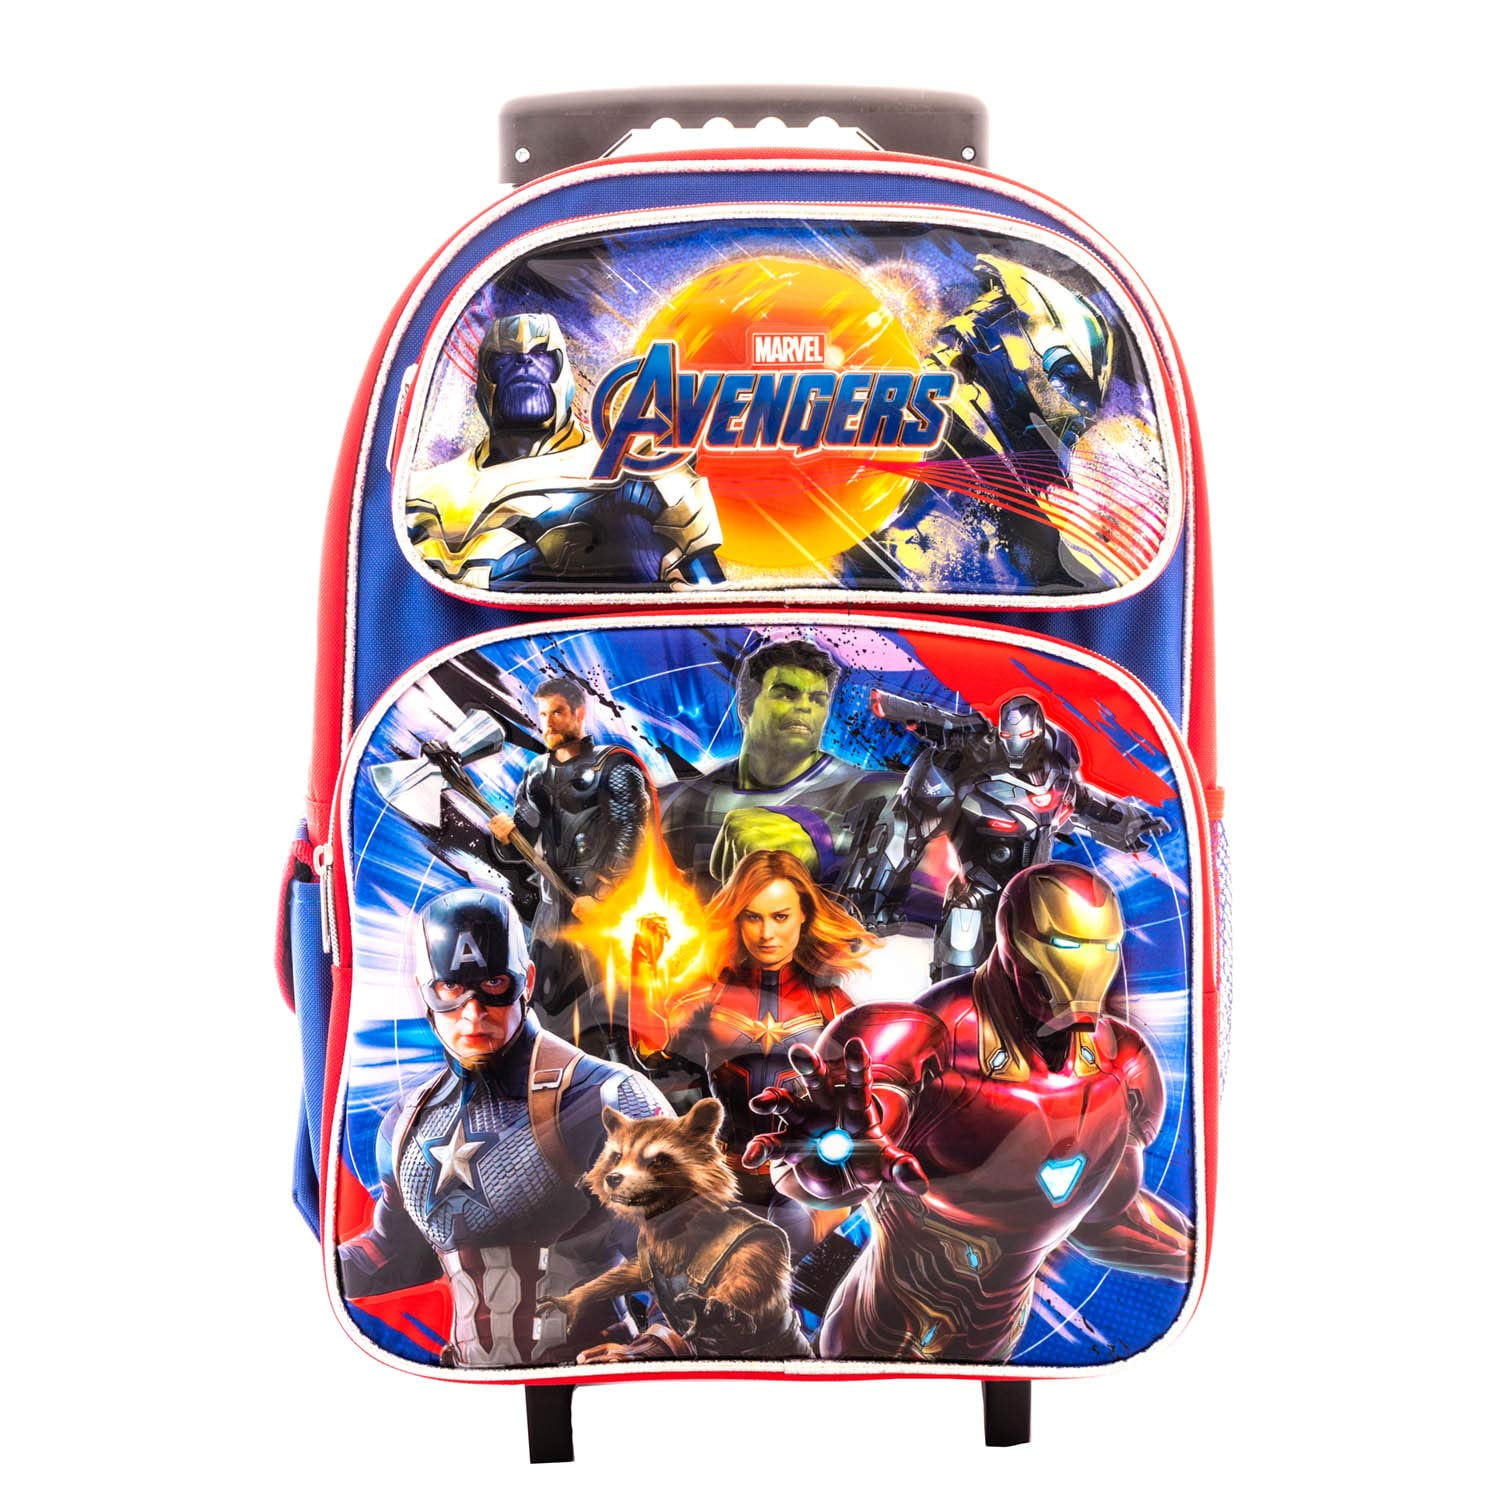 Avengers Flash Backpack Kids Schoolbag Students Bookbag Boys Handbags Travelbag 